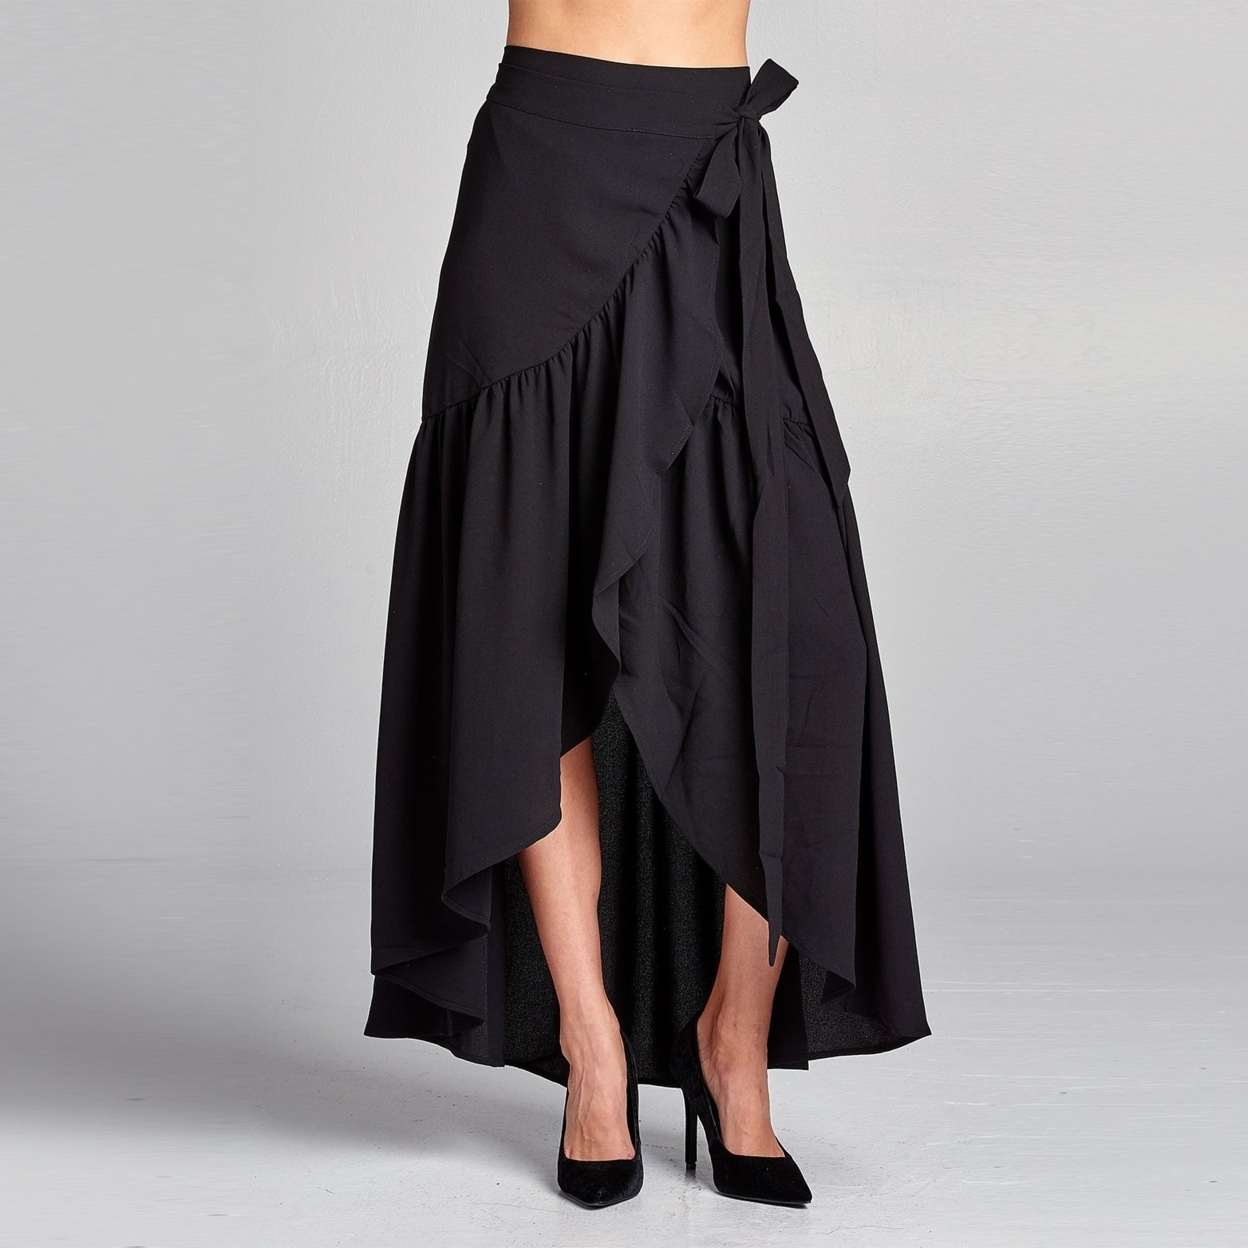 Frilled Wrap Skirt - Black, Large (12-14)